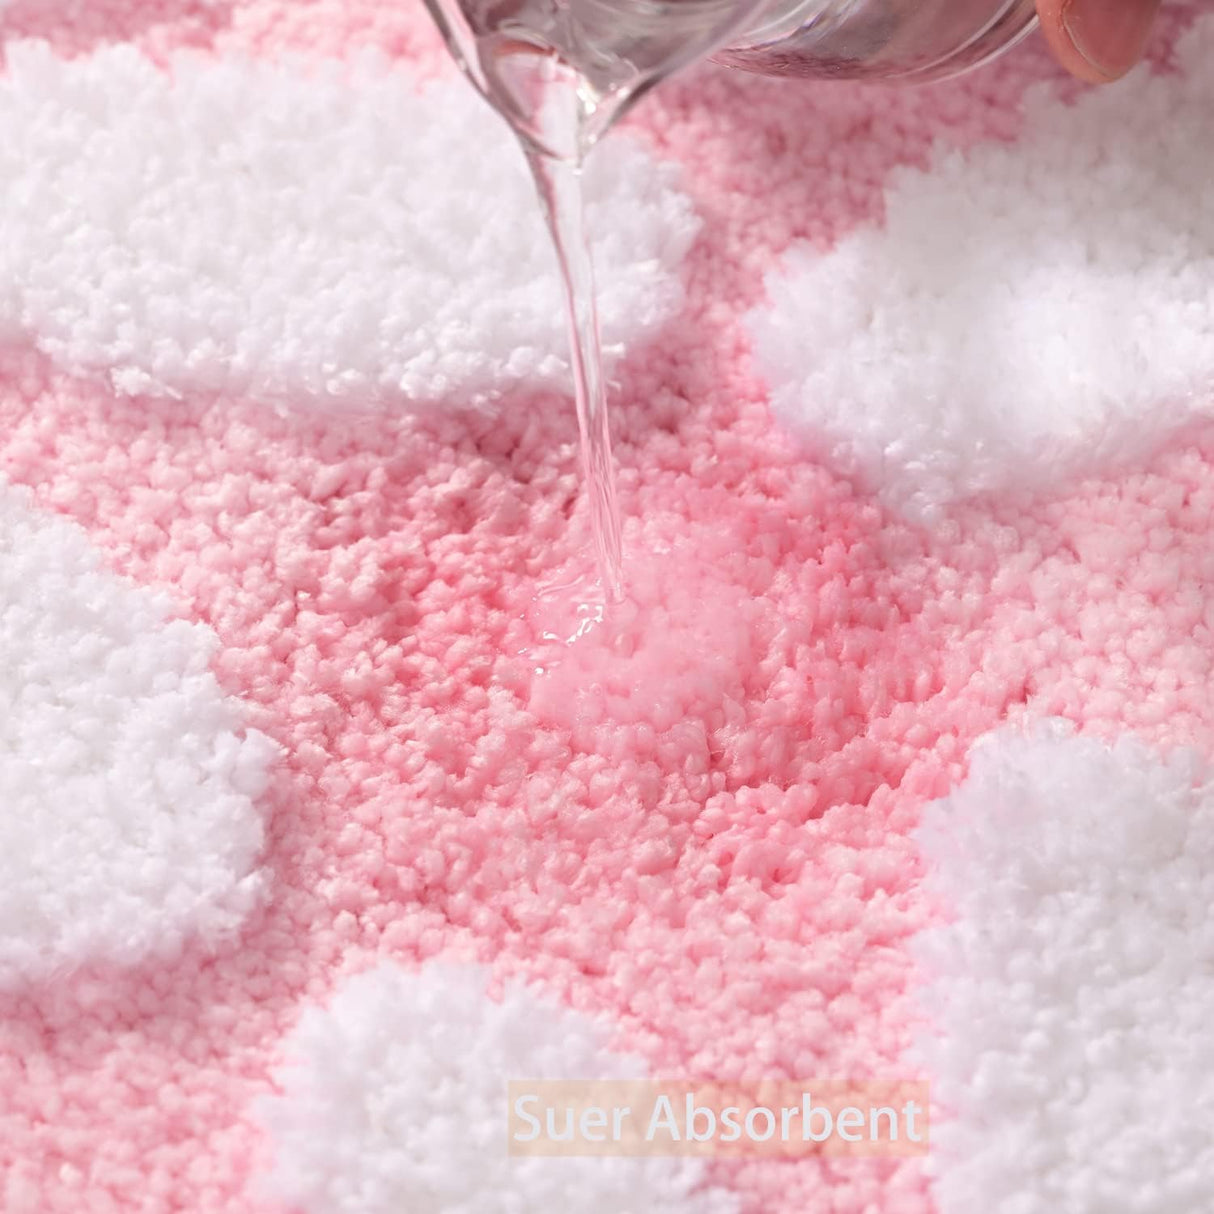 Pink Bathroom Rugs Cute Daisy Bath Mat White and Yellow Flower Decor Rug Non Slip Floor Carpet Microfiber Bathmat Super Absorbent Machine Washable Bahtub Mats for Shower, Tub, Bedroom 16"x 24"